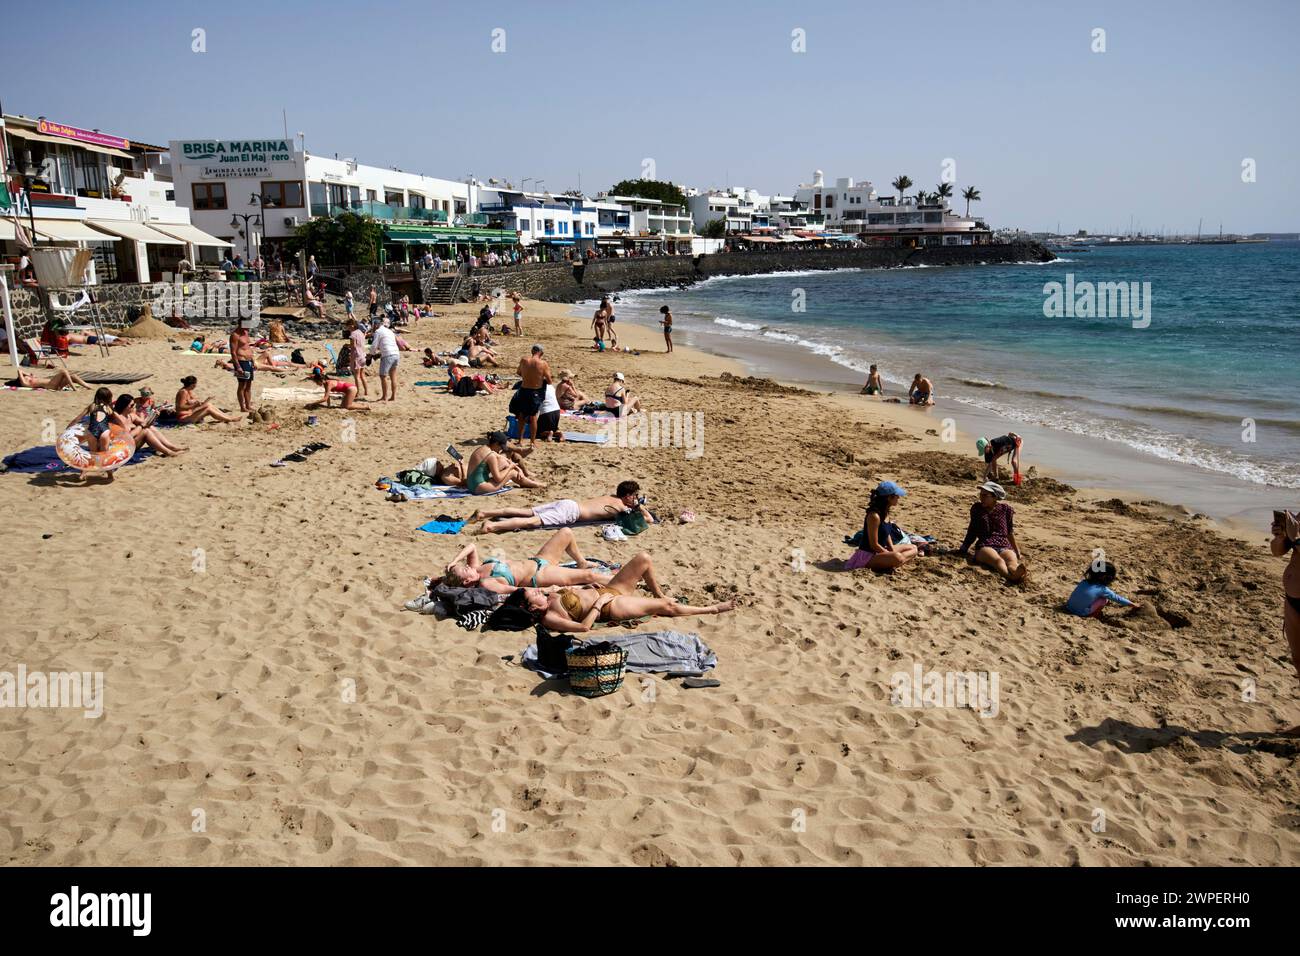 Popolare destinazione invernale al sole playa blanca Beach, Lanzarote, Isole Canarie, spagna Foto Stock